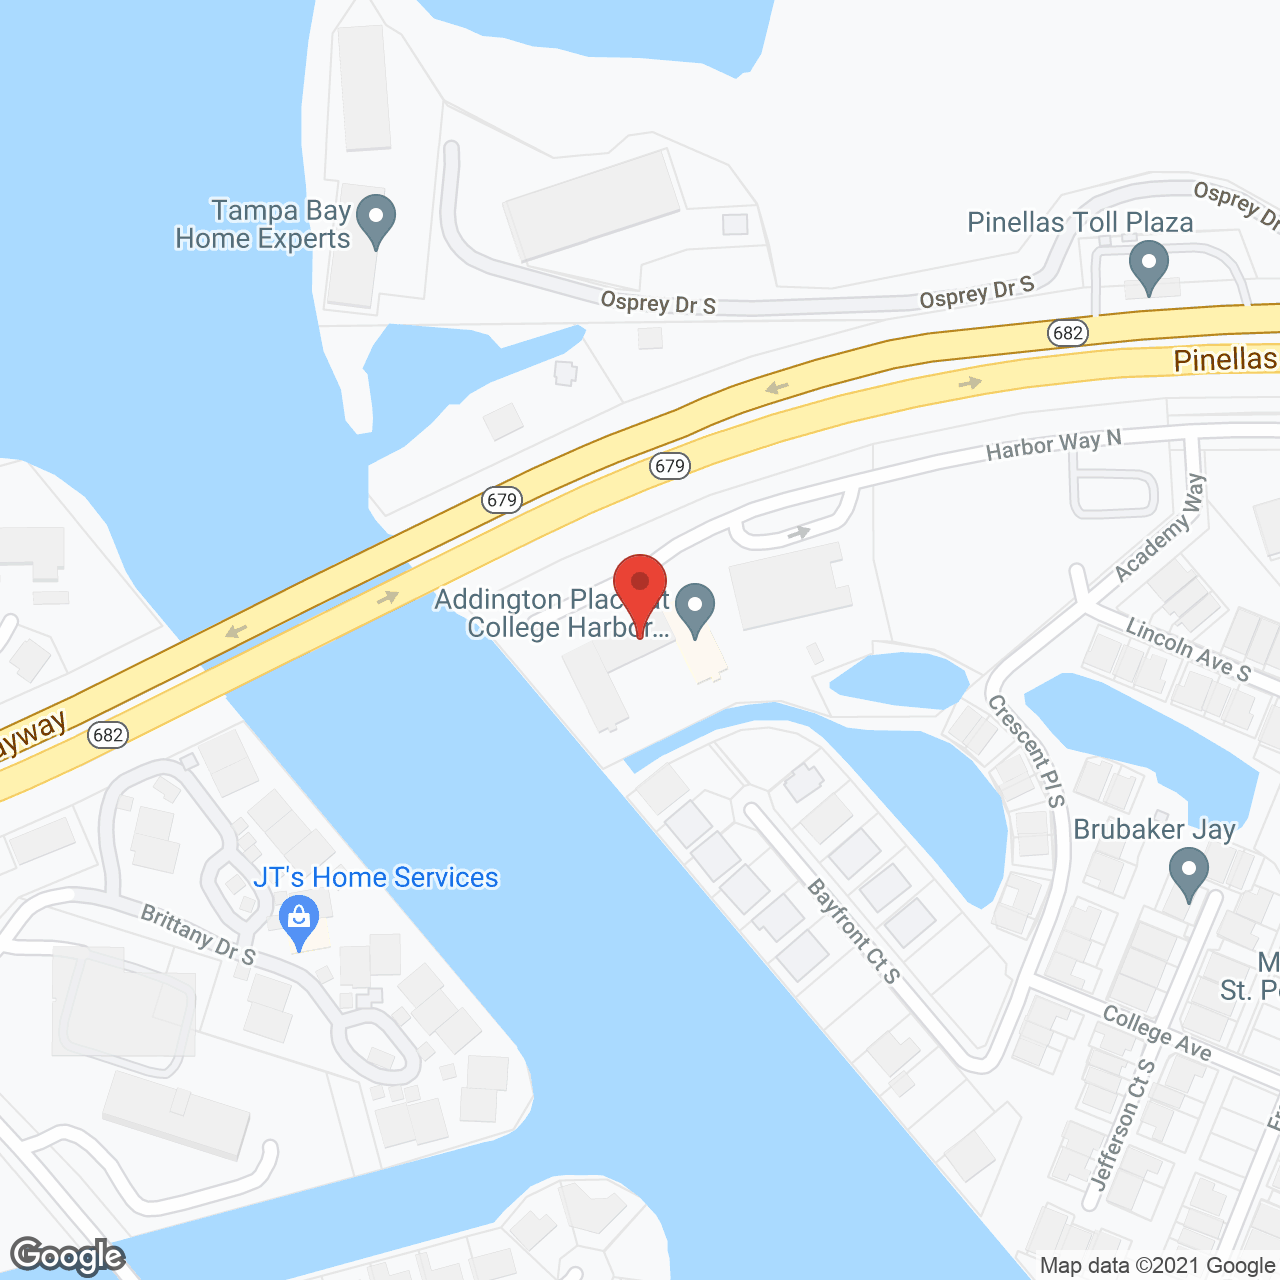 Addington Place at College Harbor in google map